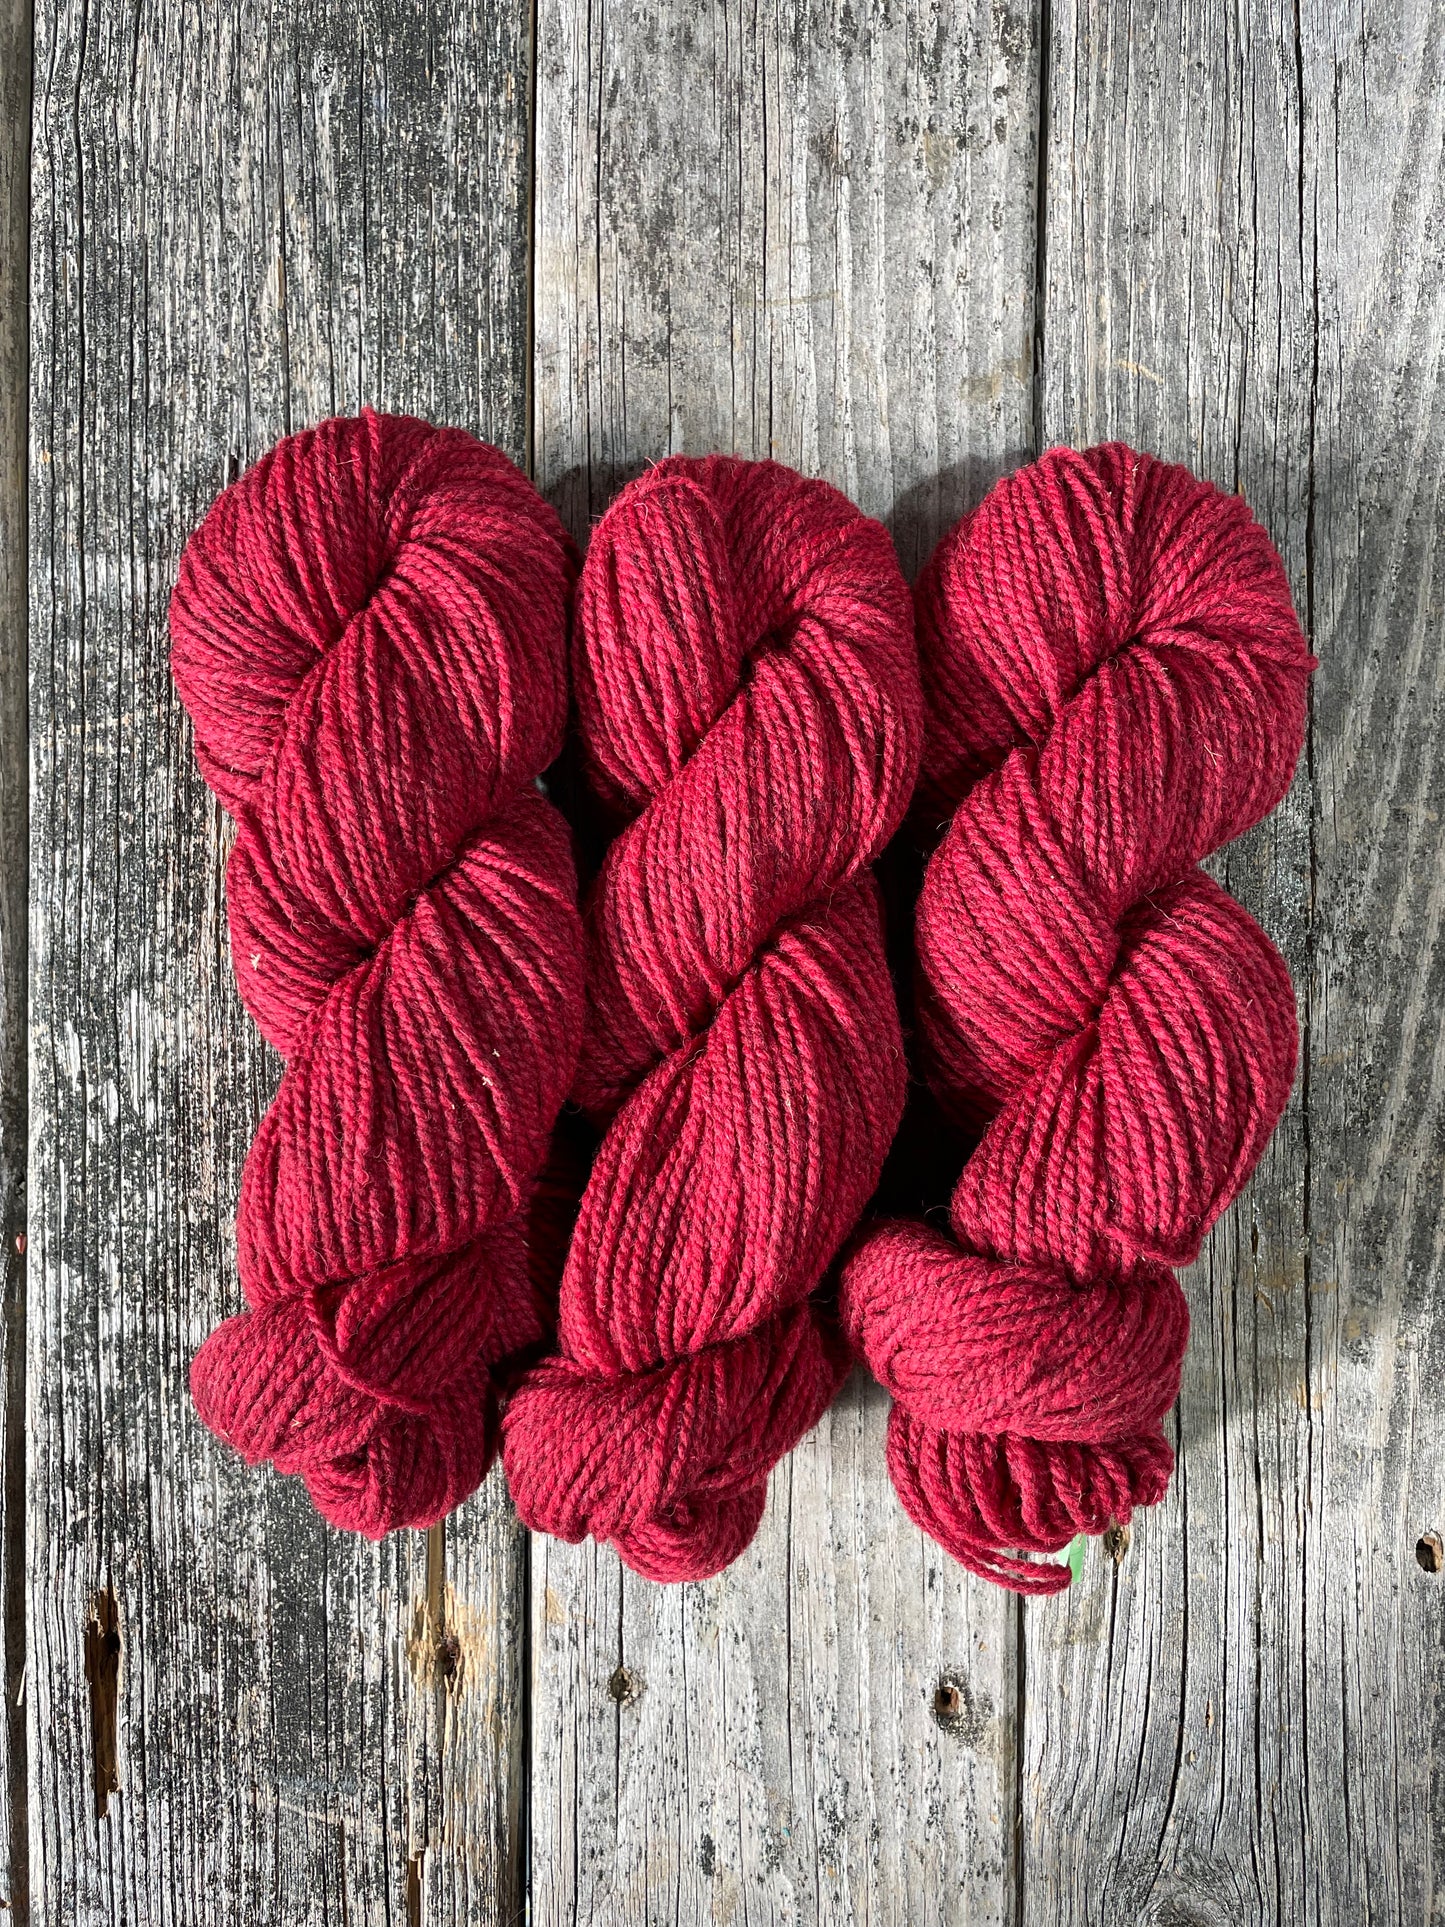 Briggs & Little Tuffy: Red Mix - Maine Yarn & Fiber Supply